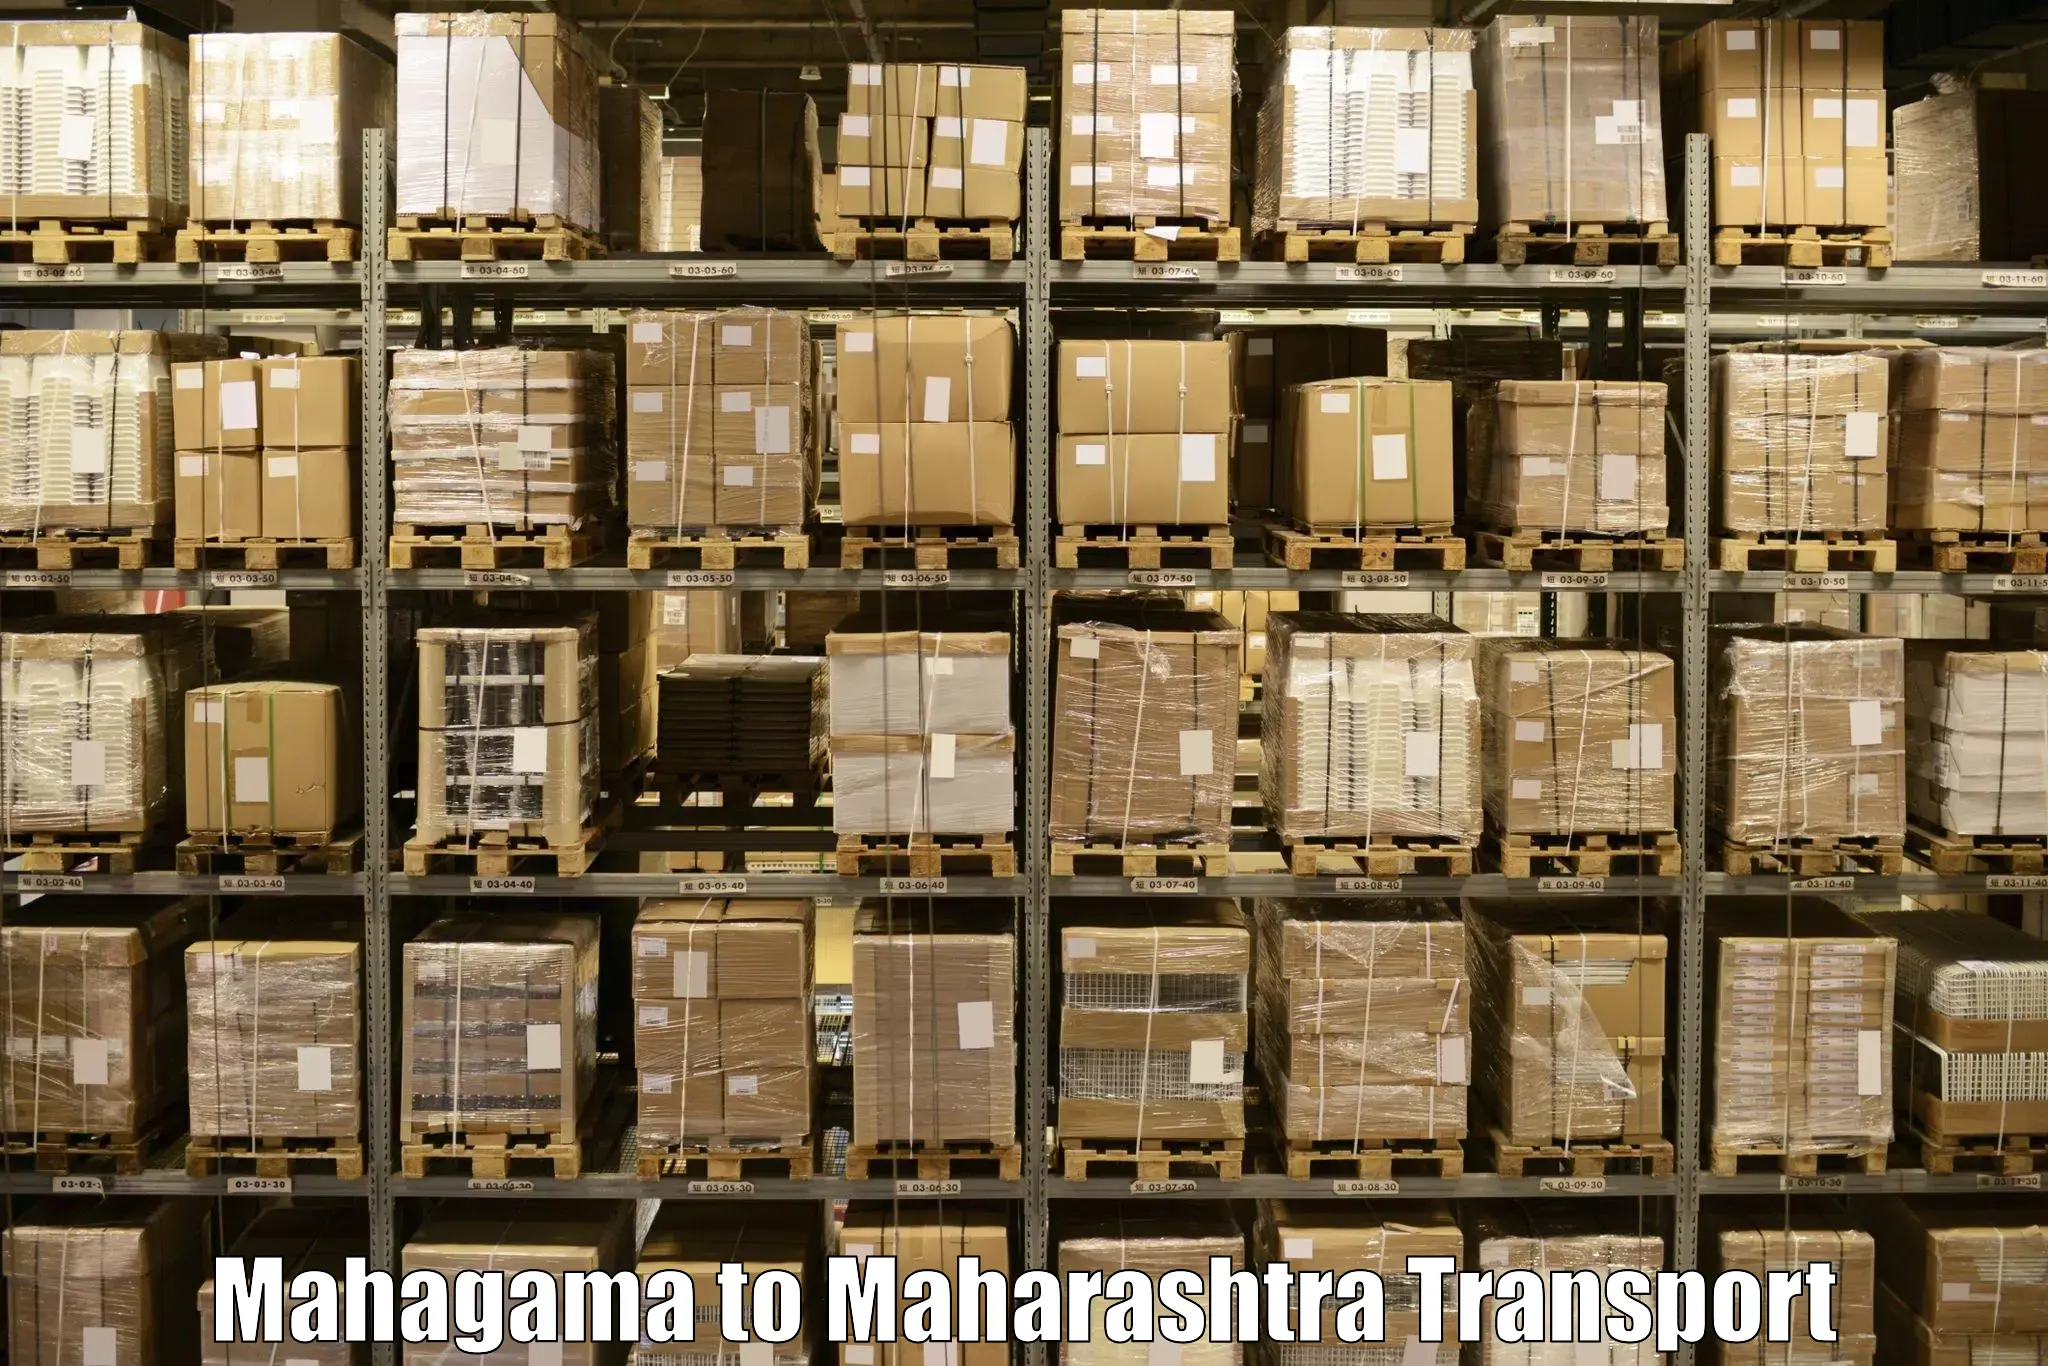 Sending bike to another city Mahagama to Sangamner